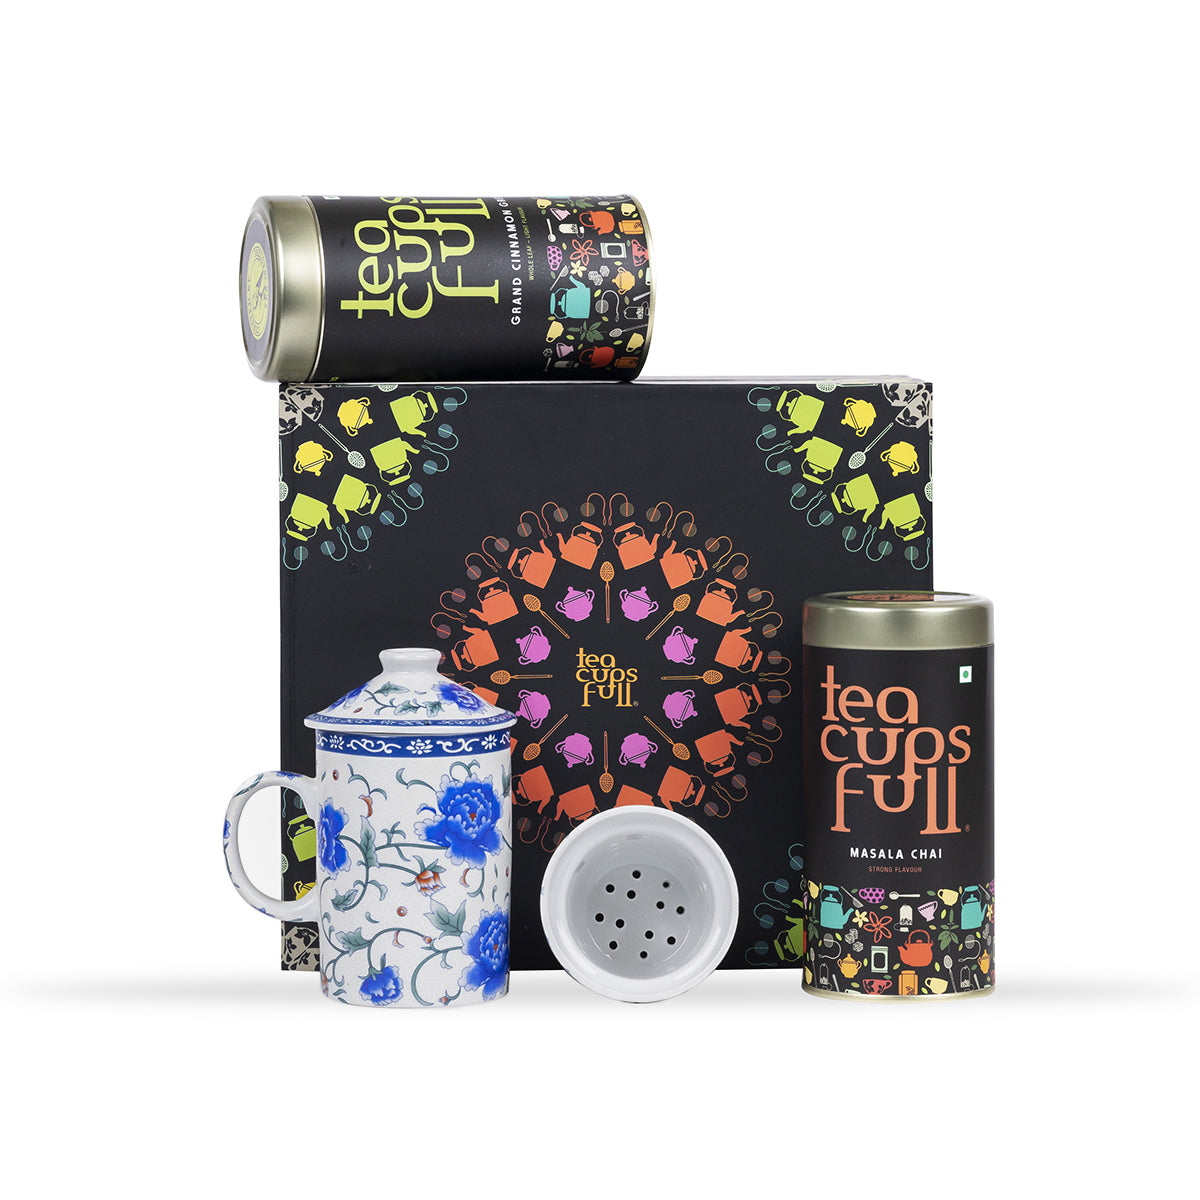 Tea gift; Tea gift sets, tea gift box, tea gift hampers, tea gift packs, tea gift hampers India, tea gift sets India